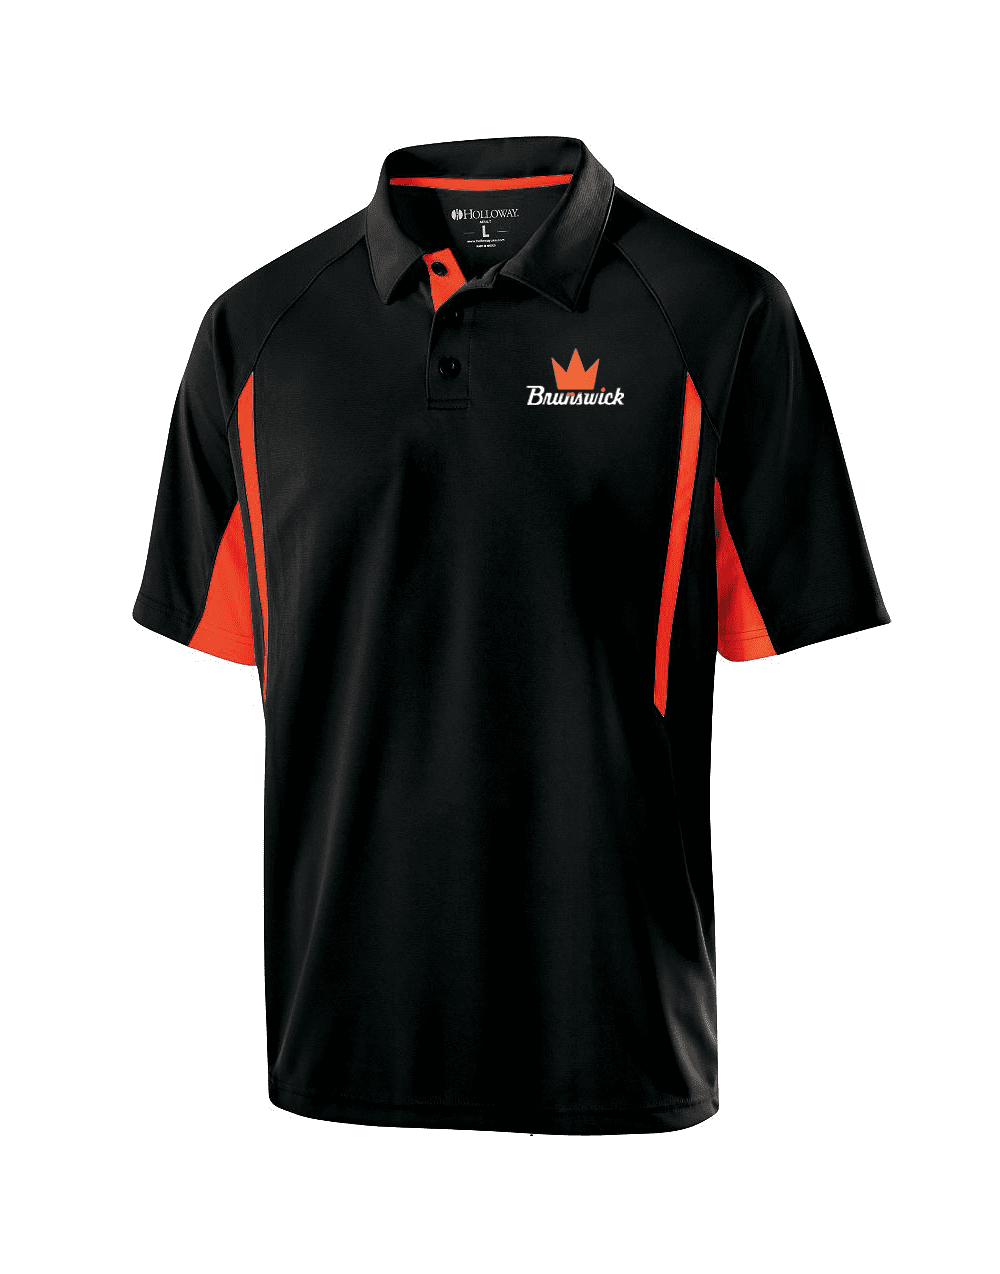 Columbia 300 Men's Burst Performance Polo Bowling Shirt Dri-Fit Black Red 